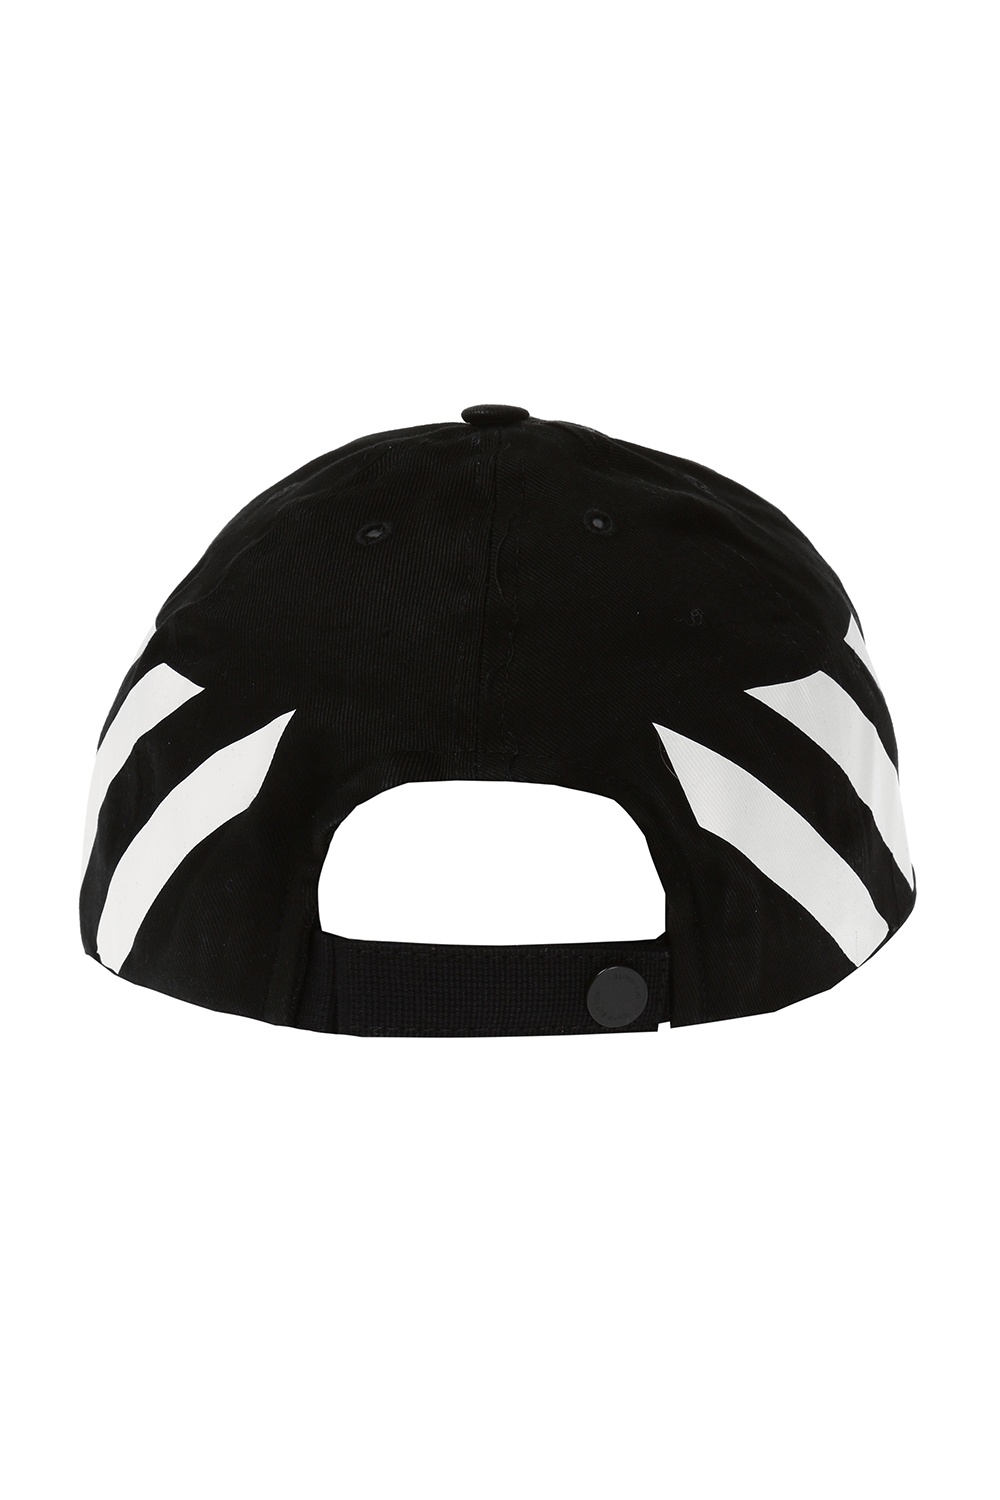 Off-White France Black Printed Vitkac baseball cap -